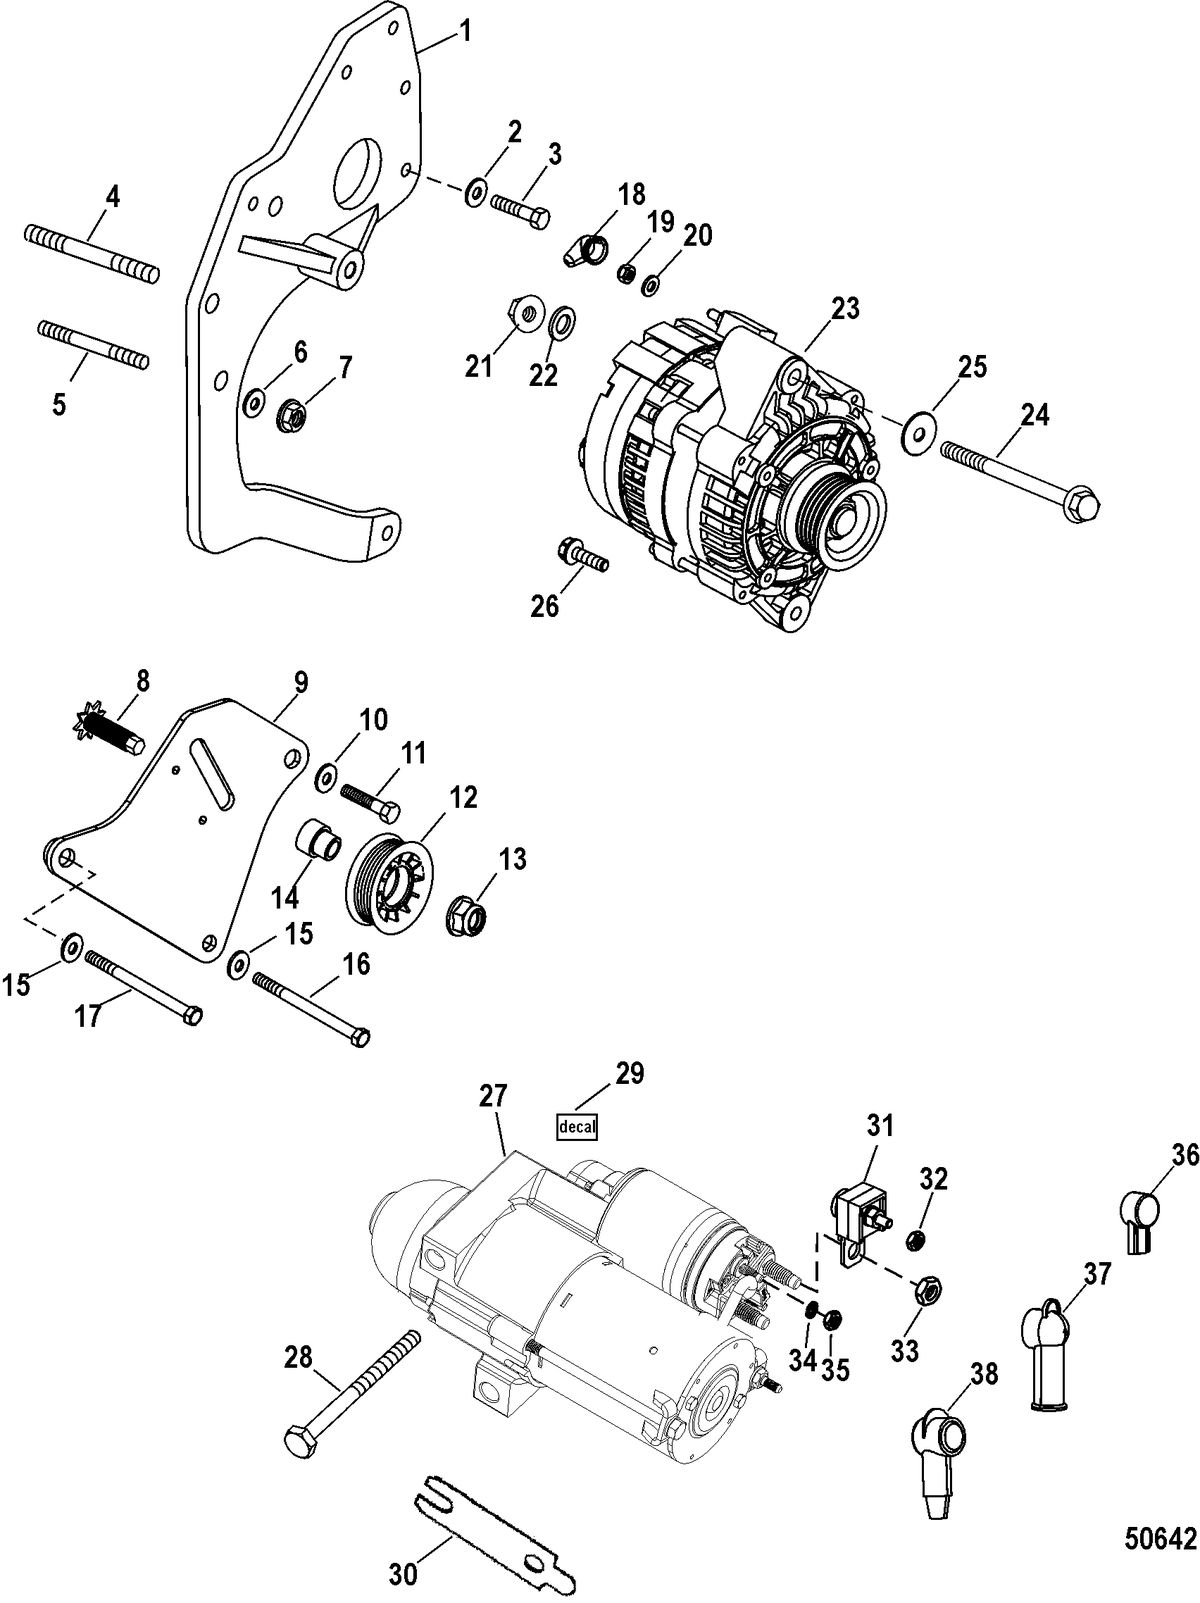 RACE STERNDRIVE 565 EFI Electrical Components(Starter And Alternator)